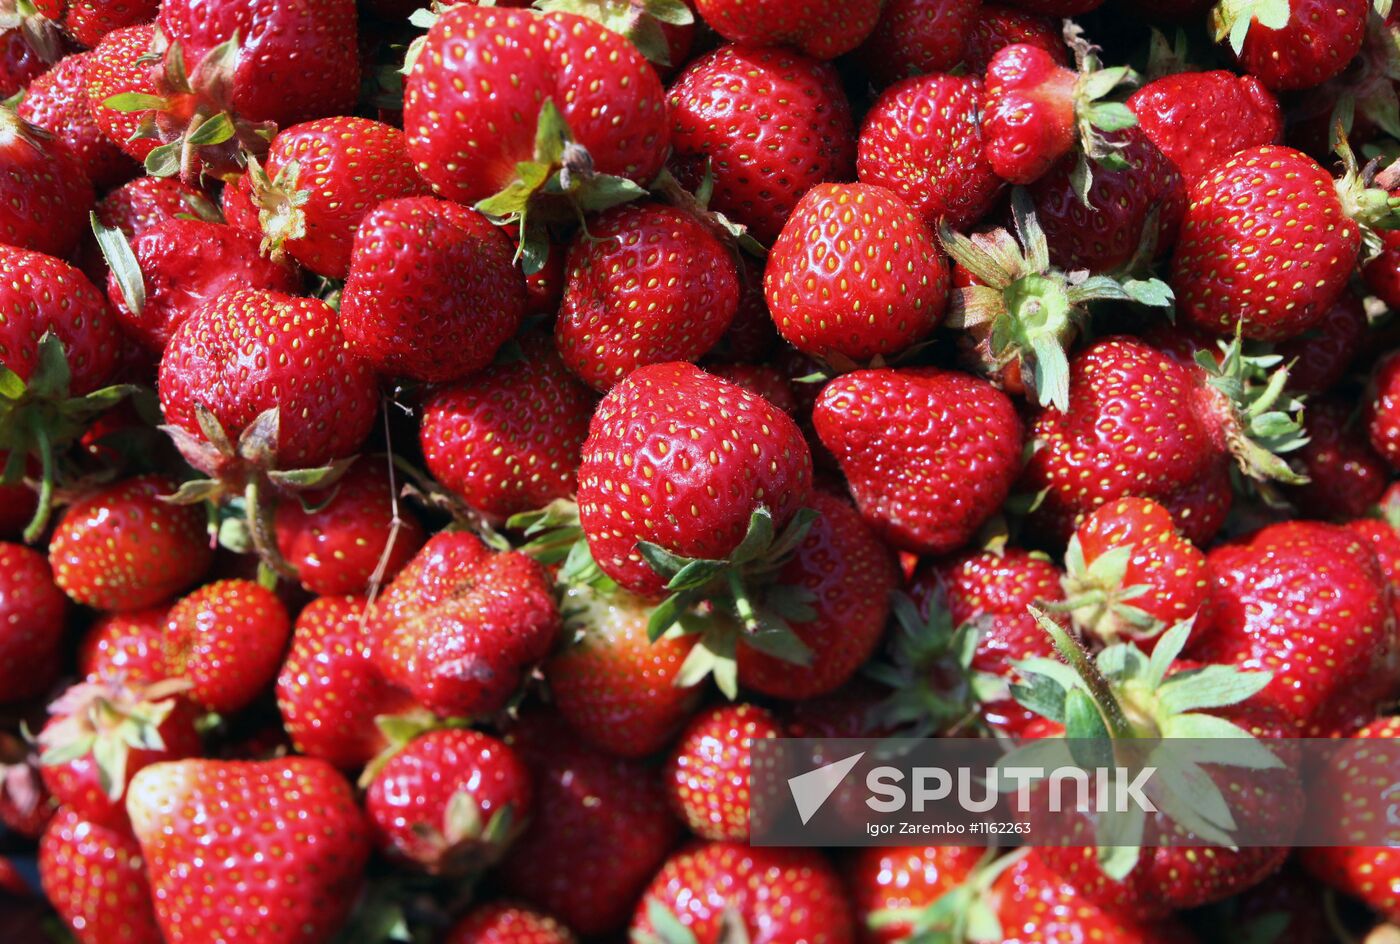 Picking strawberries in Kaliningrad region